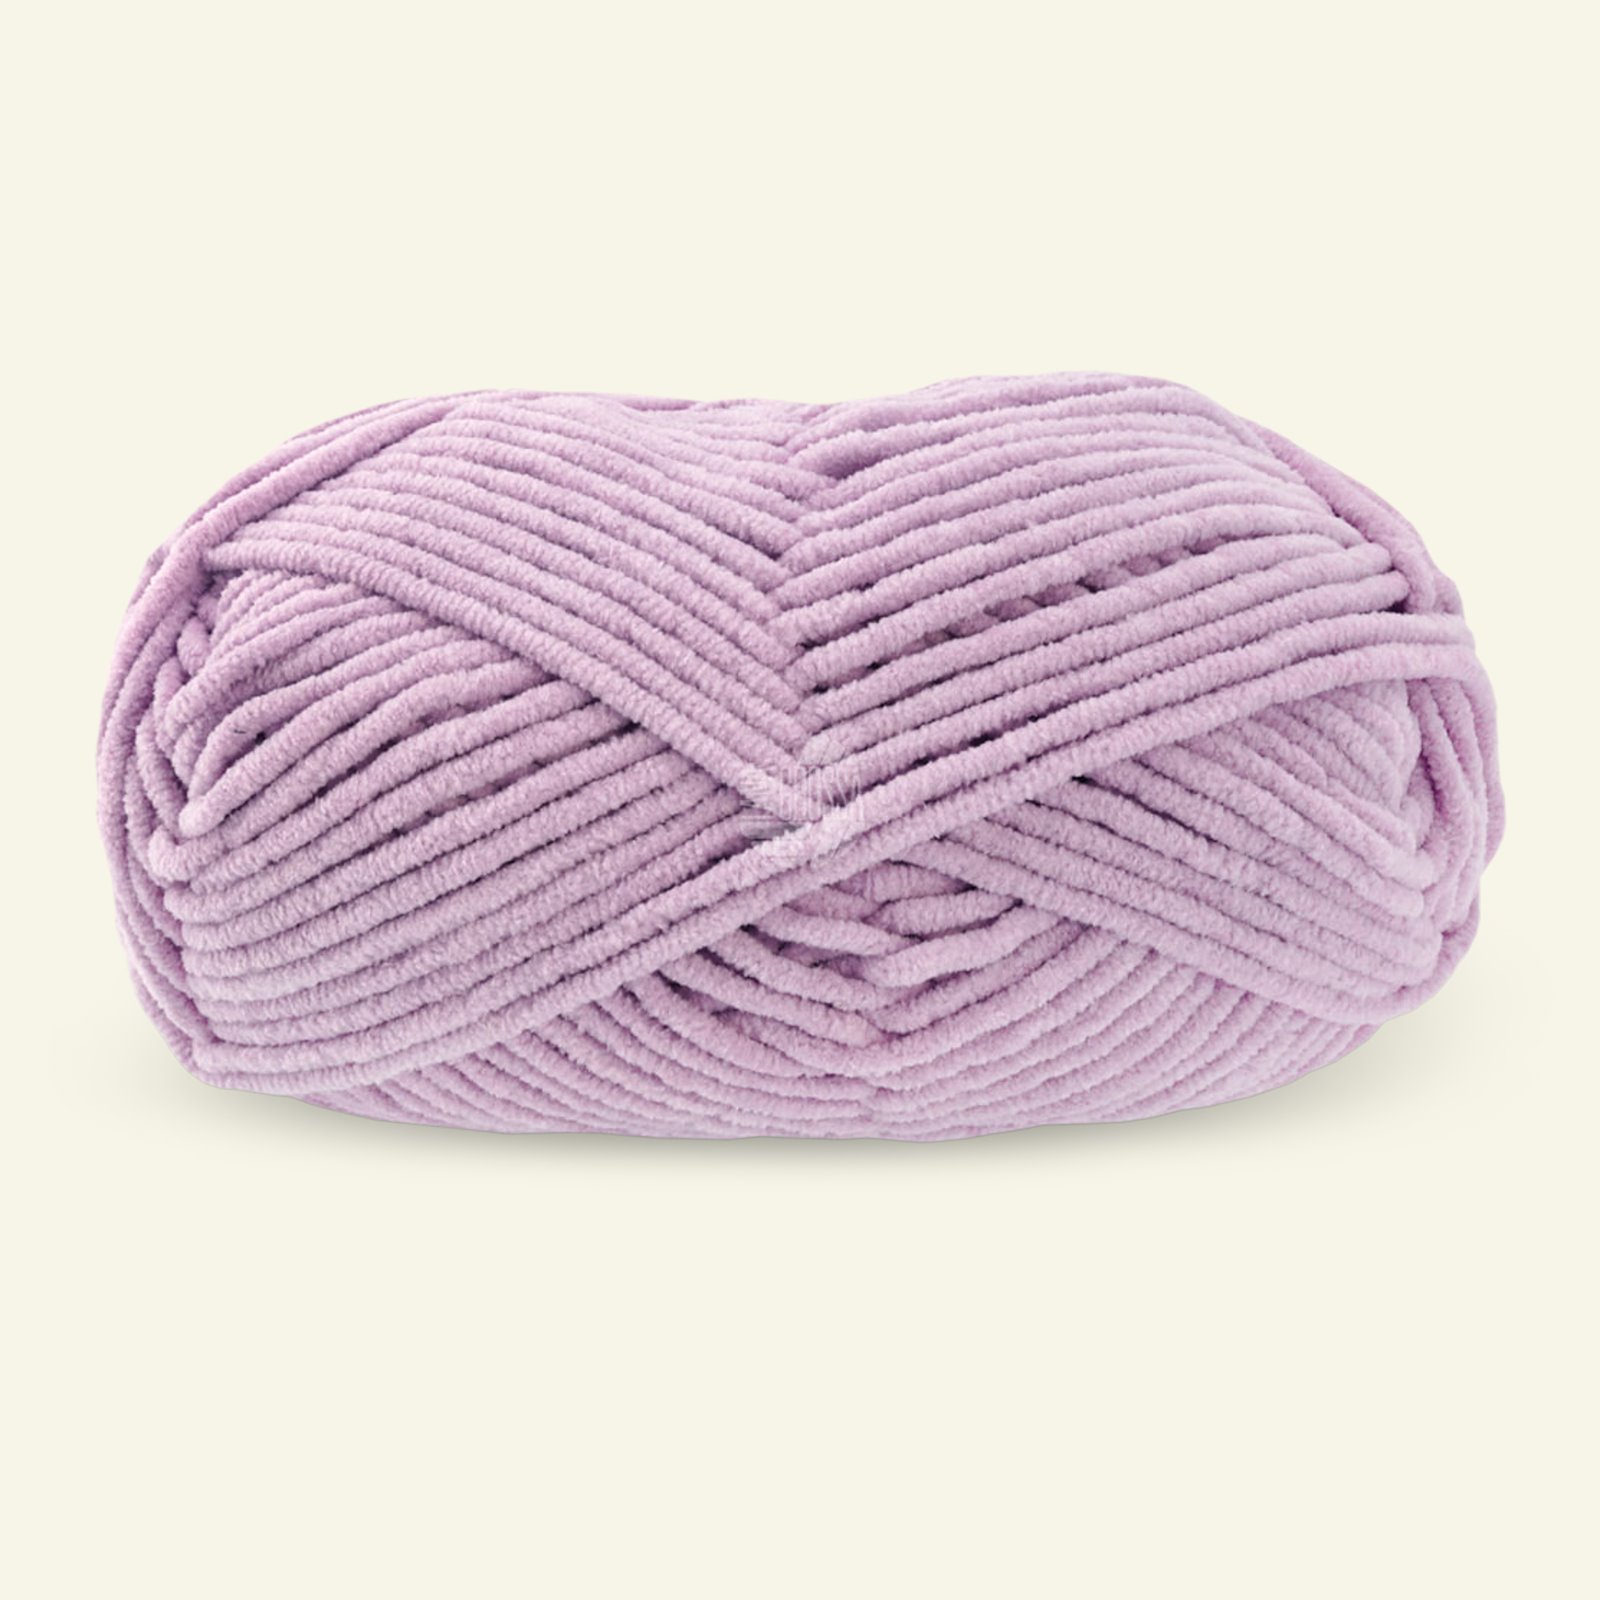 Lana Grossa, polyester yarn / velour yarn "The Look", violet 90001136_pack